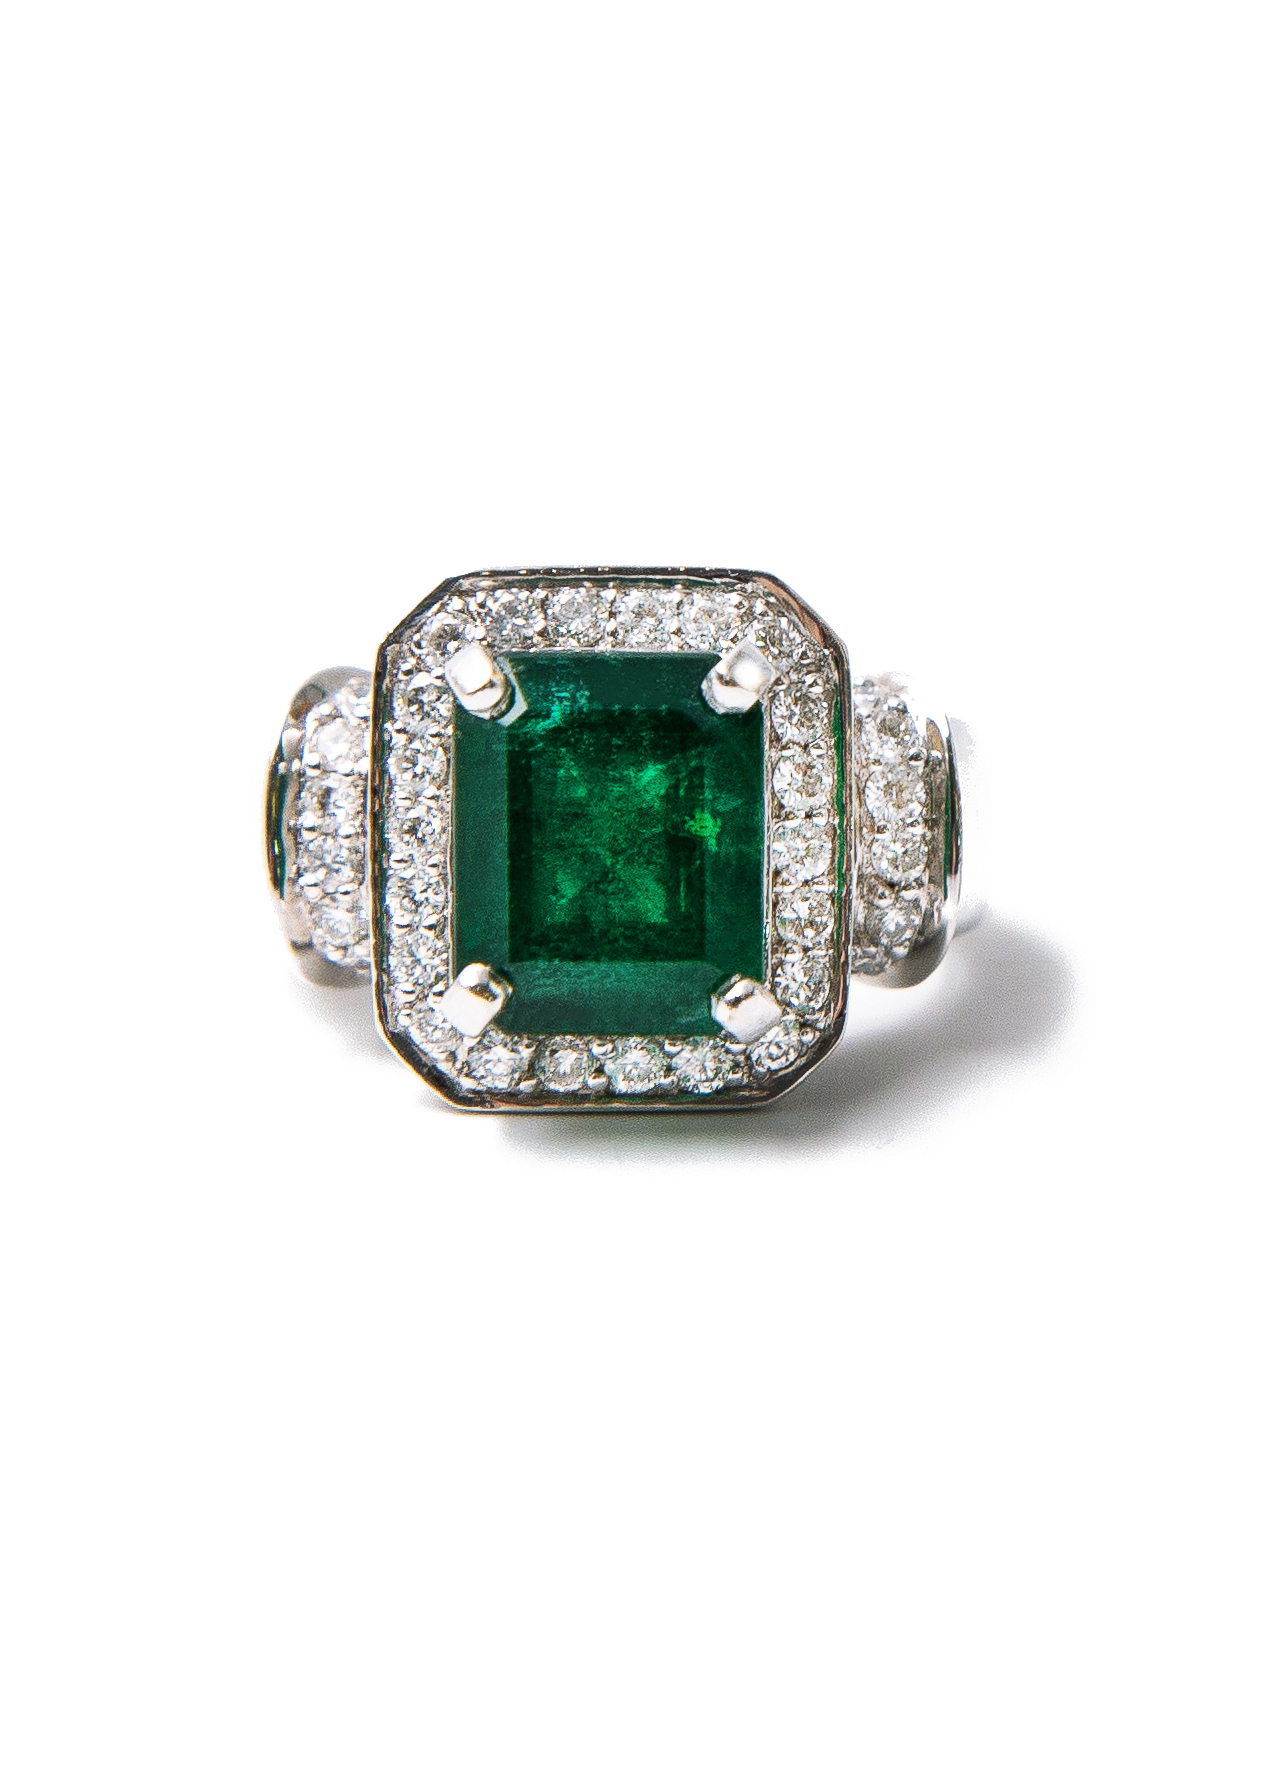 925 Silver CZ Emerald Cocktail Ring | Amrrutam